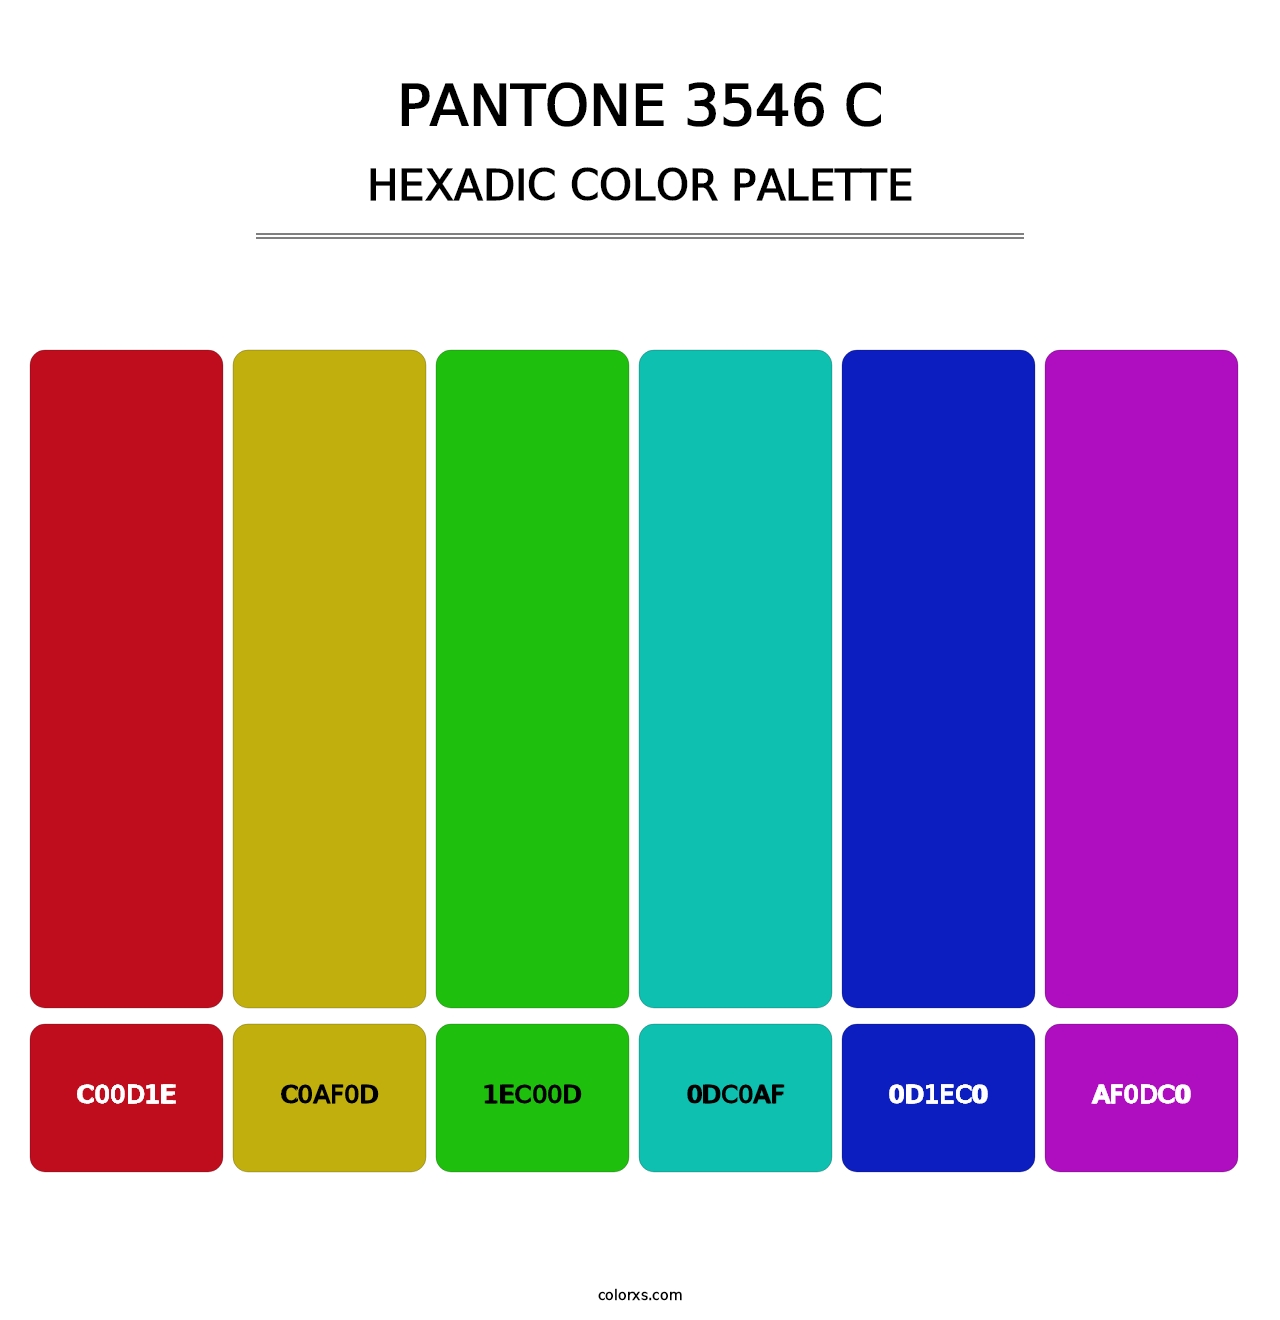 PANTONE 3546 C - Hexadic Color Palette